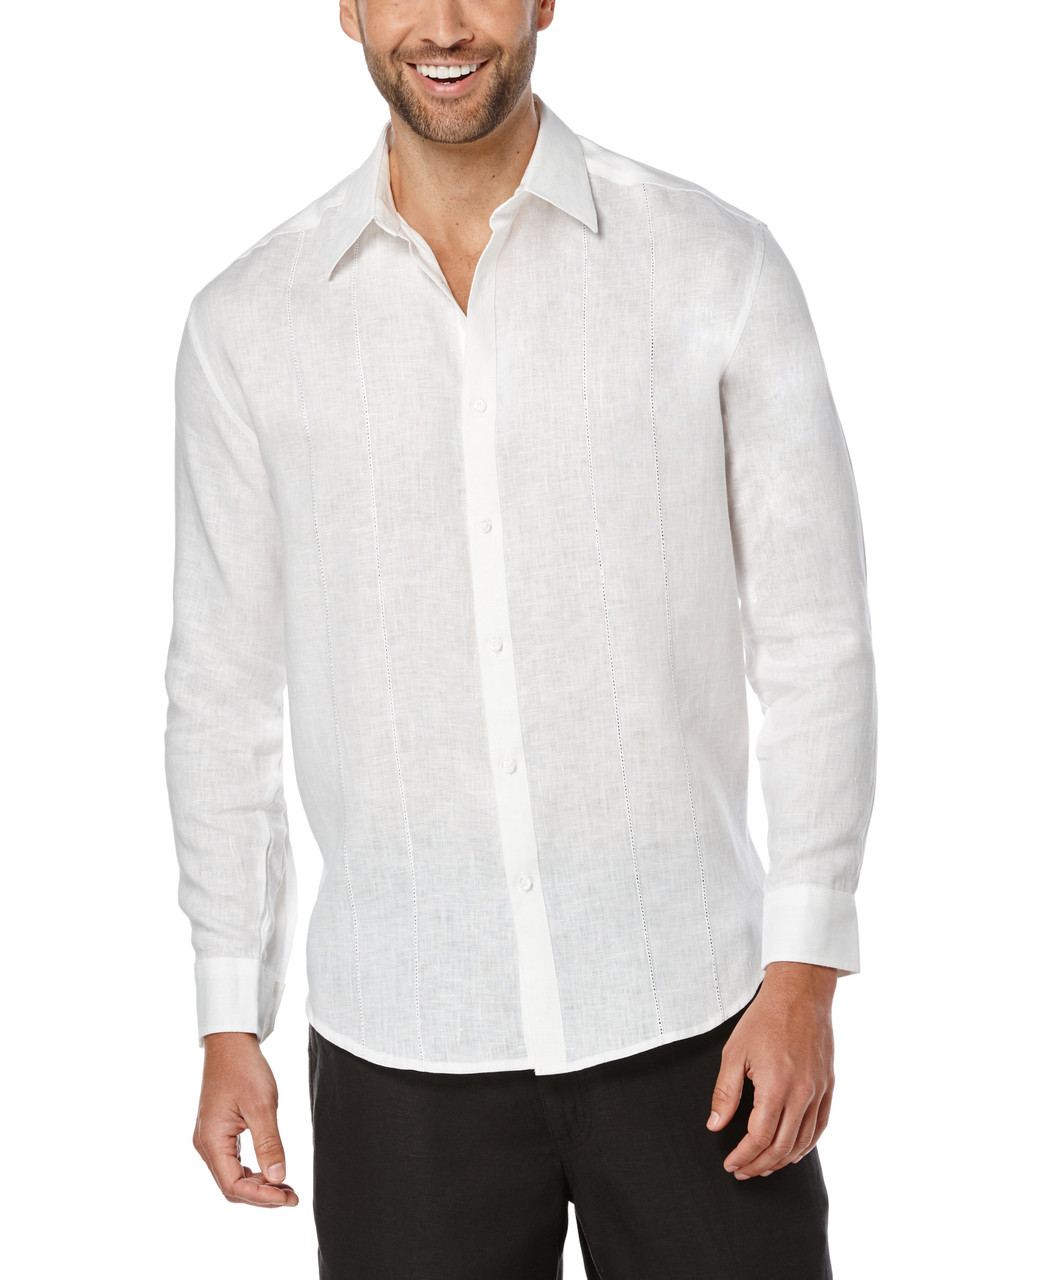 Cubavera 100% Linen Panel Long Sleeve Shirt - Dick Anthony Ltd.